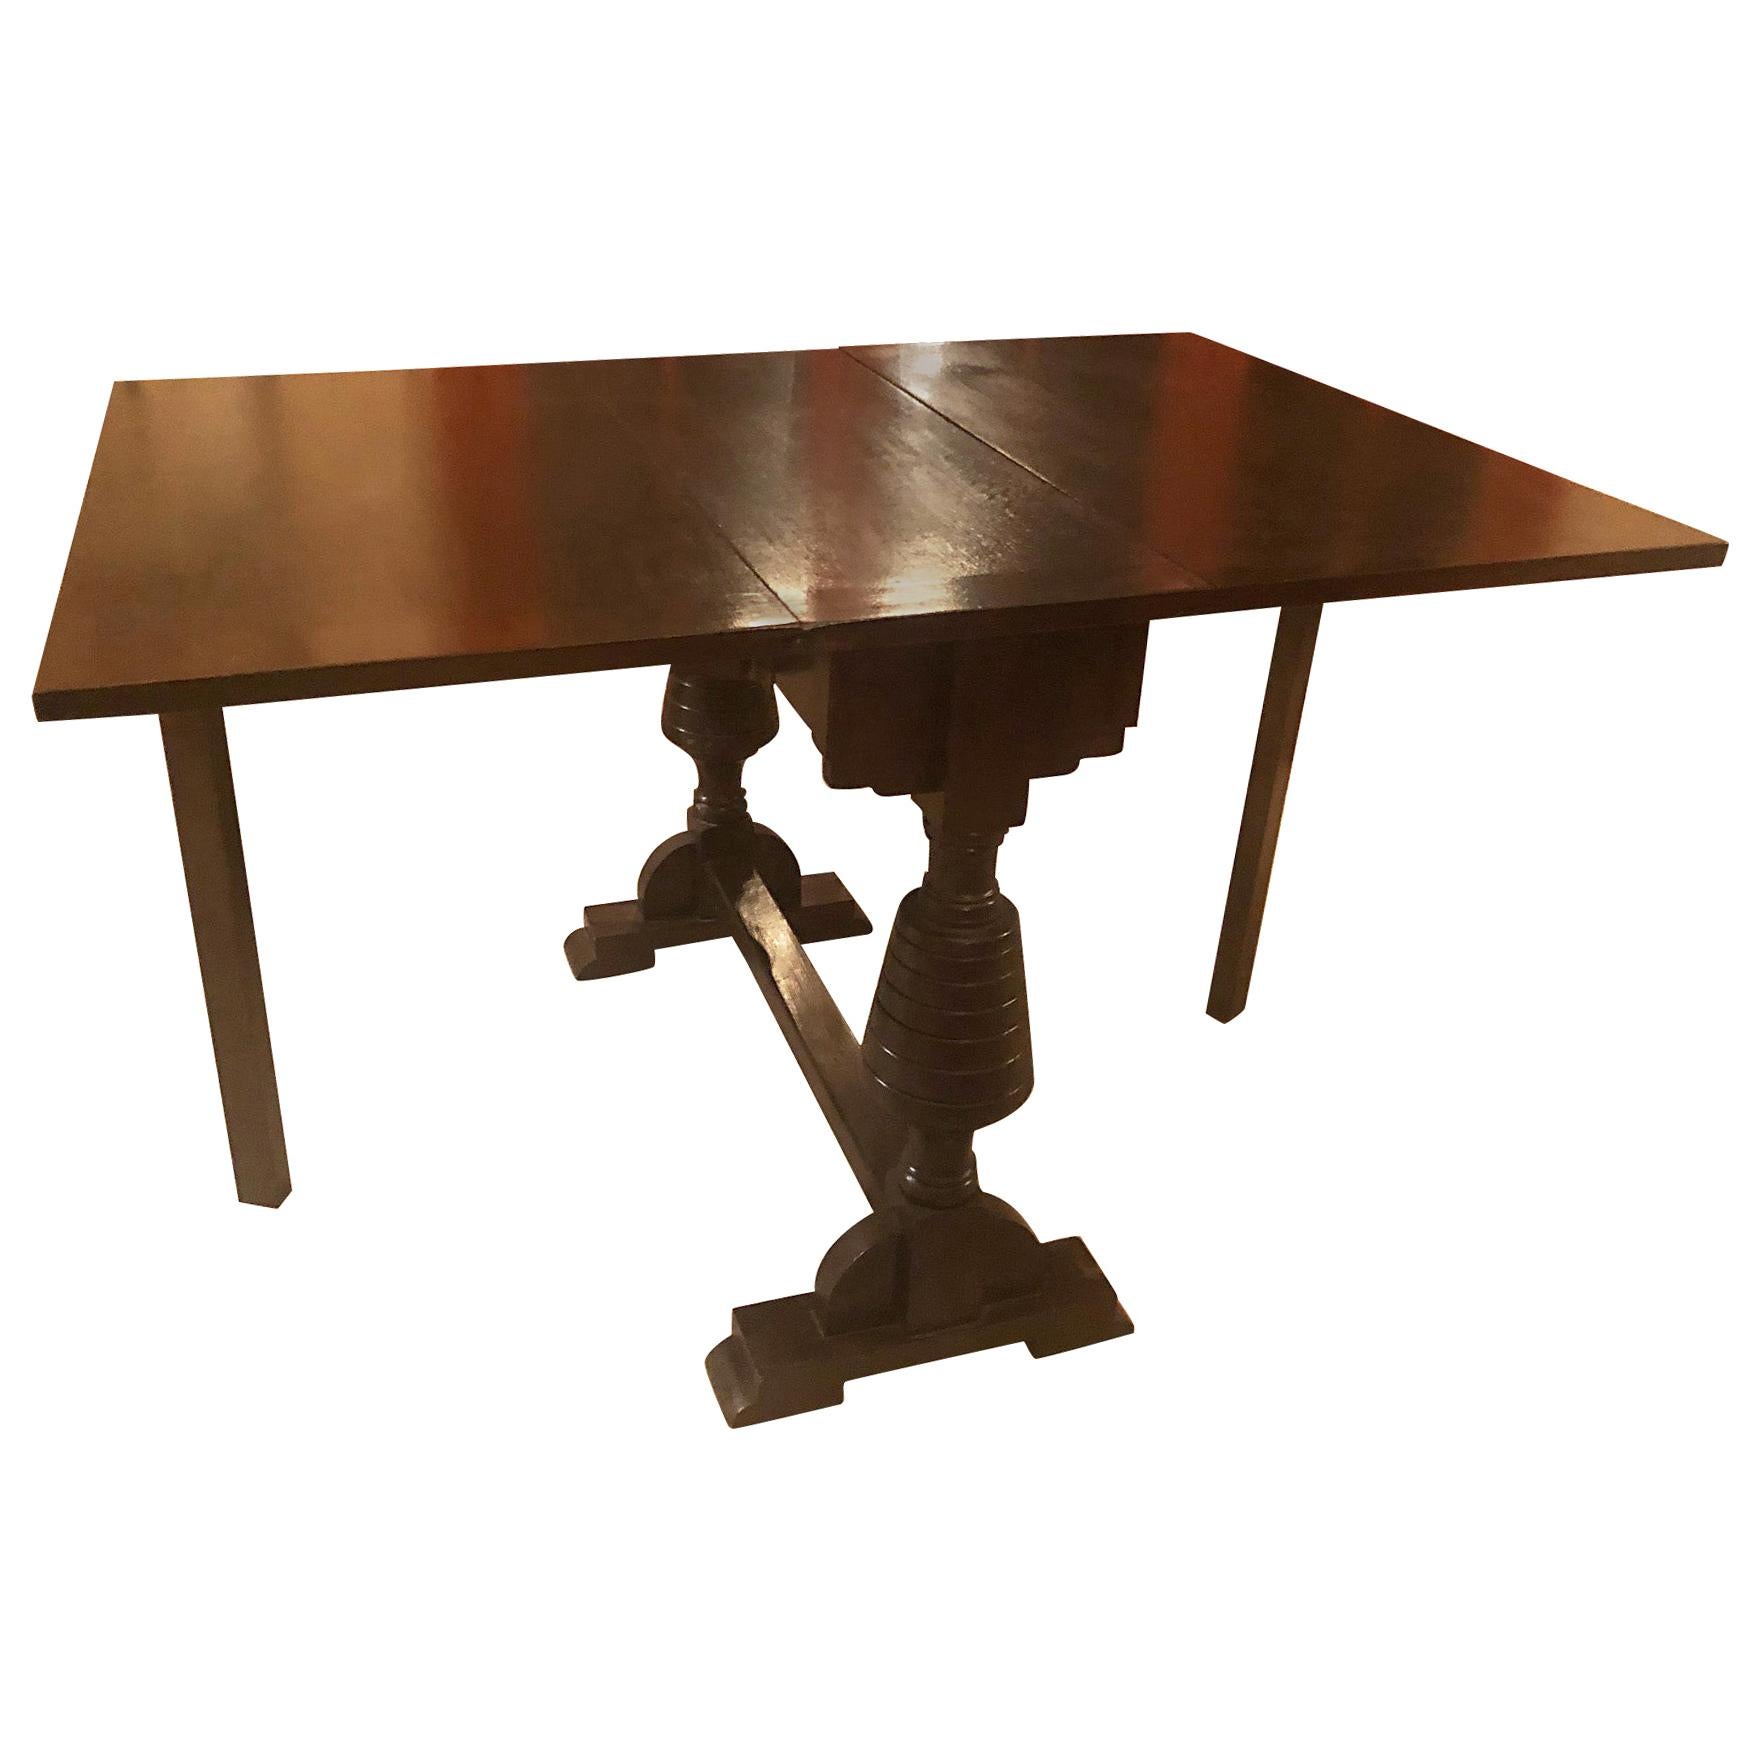  Original  solid Oak Strip Table, Beautiful as a Console Table, Dark Color